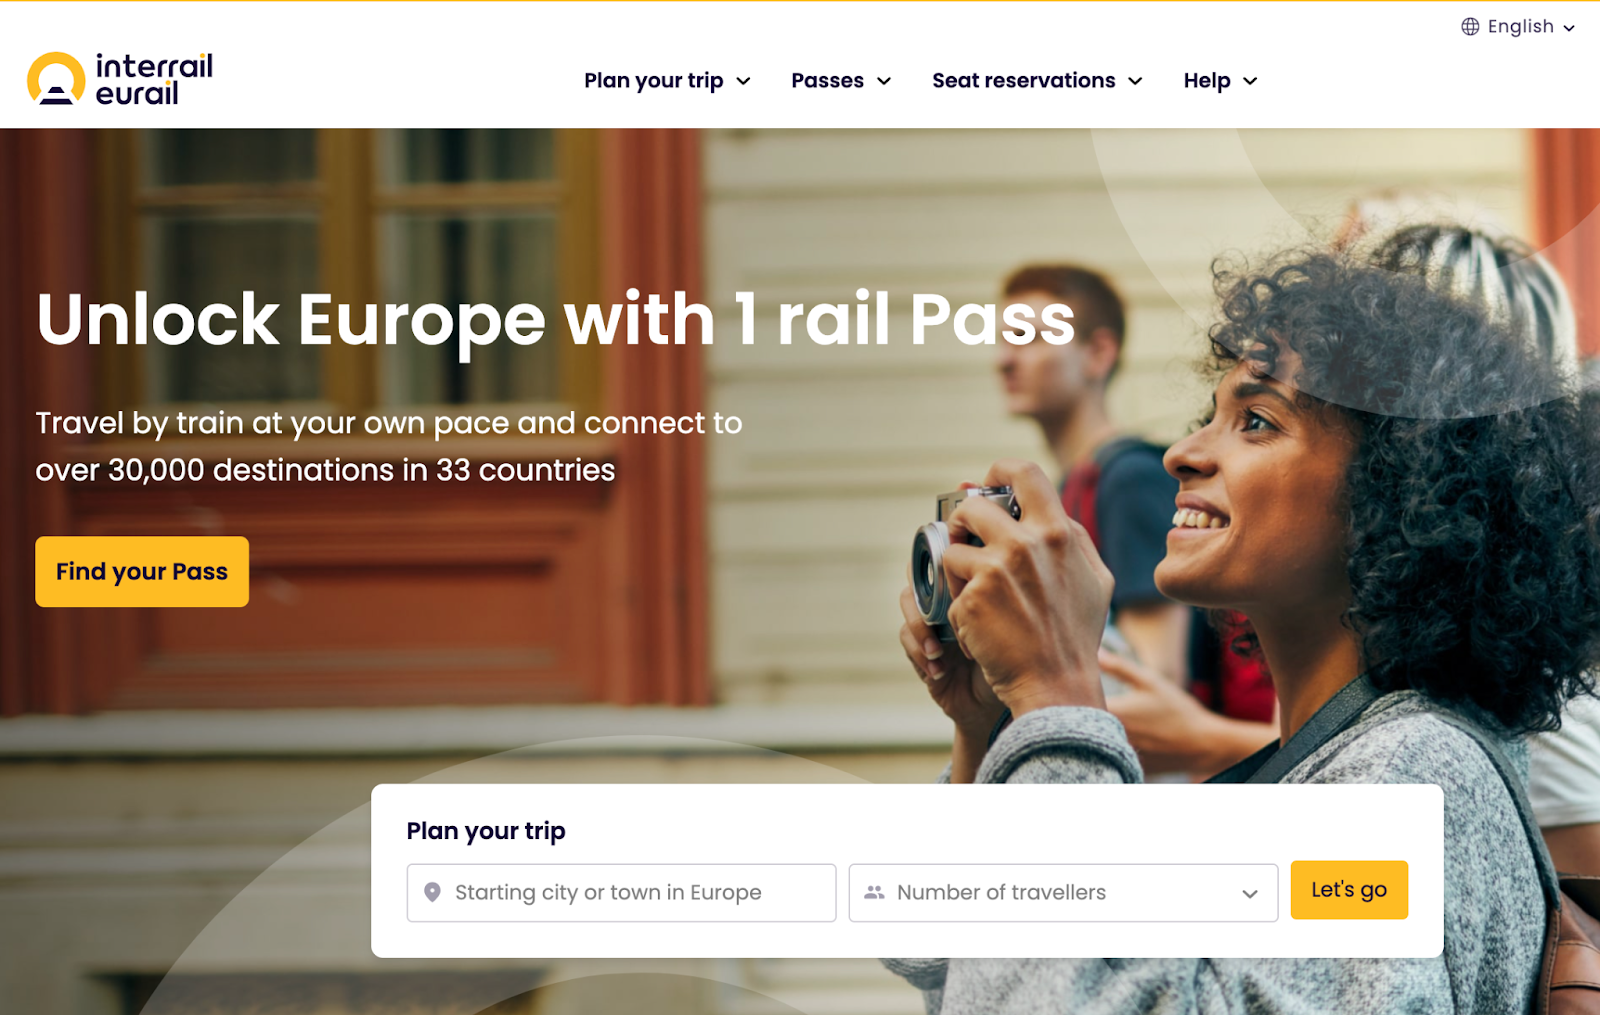 Interrail and eurail homepage